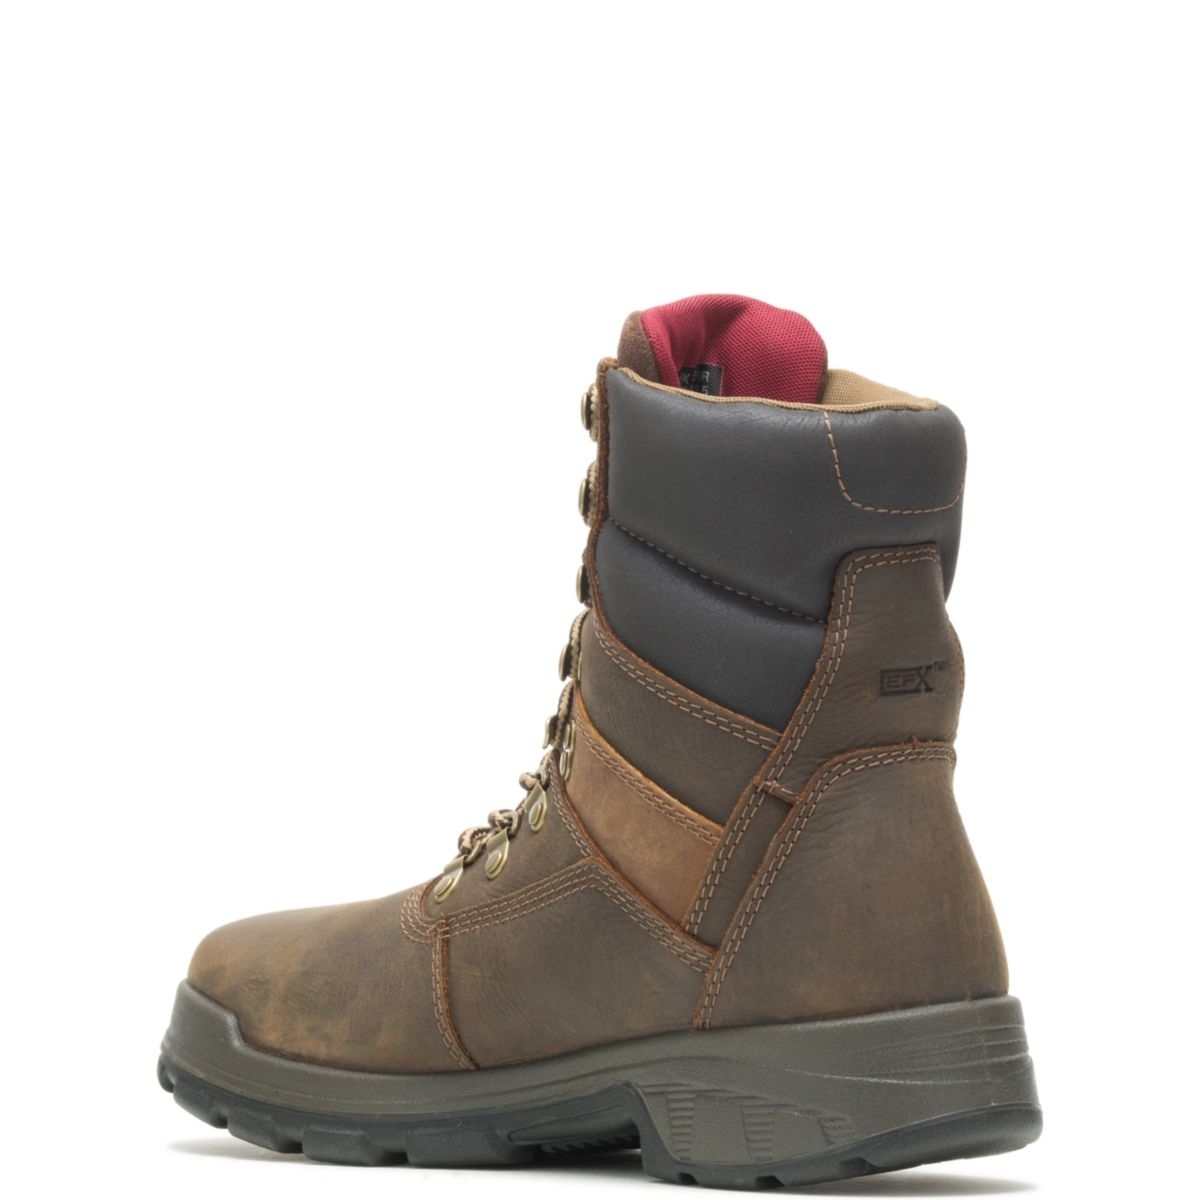 WOLVERINE Men's Cabor EPXÂ® 8 Waterproof Composite Toe Work Boot Dark Brown - W10316 BROWN - BROWN, 8-2E